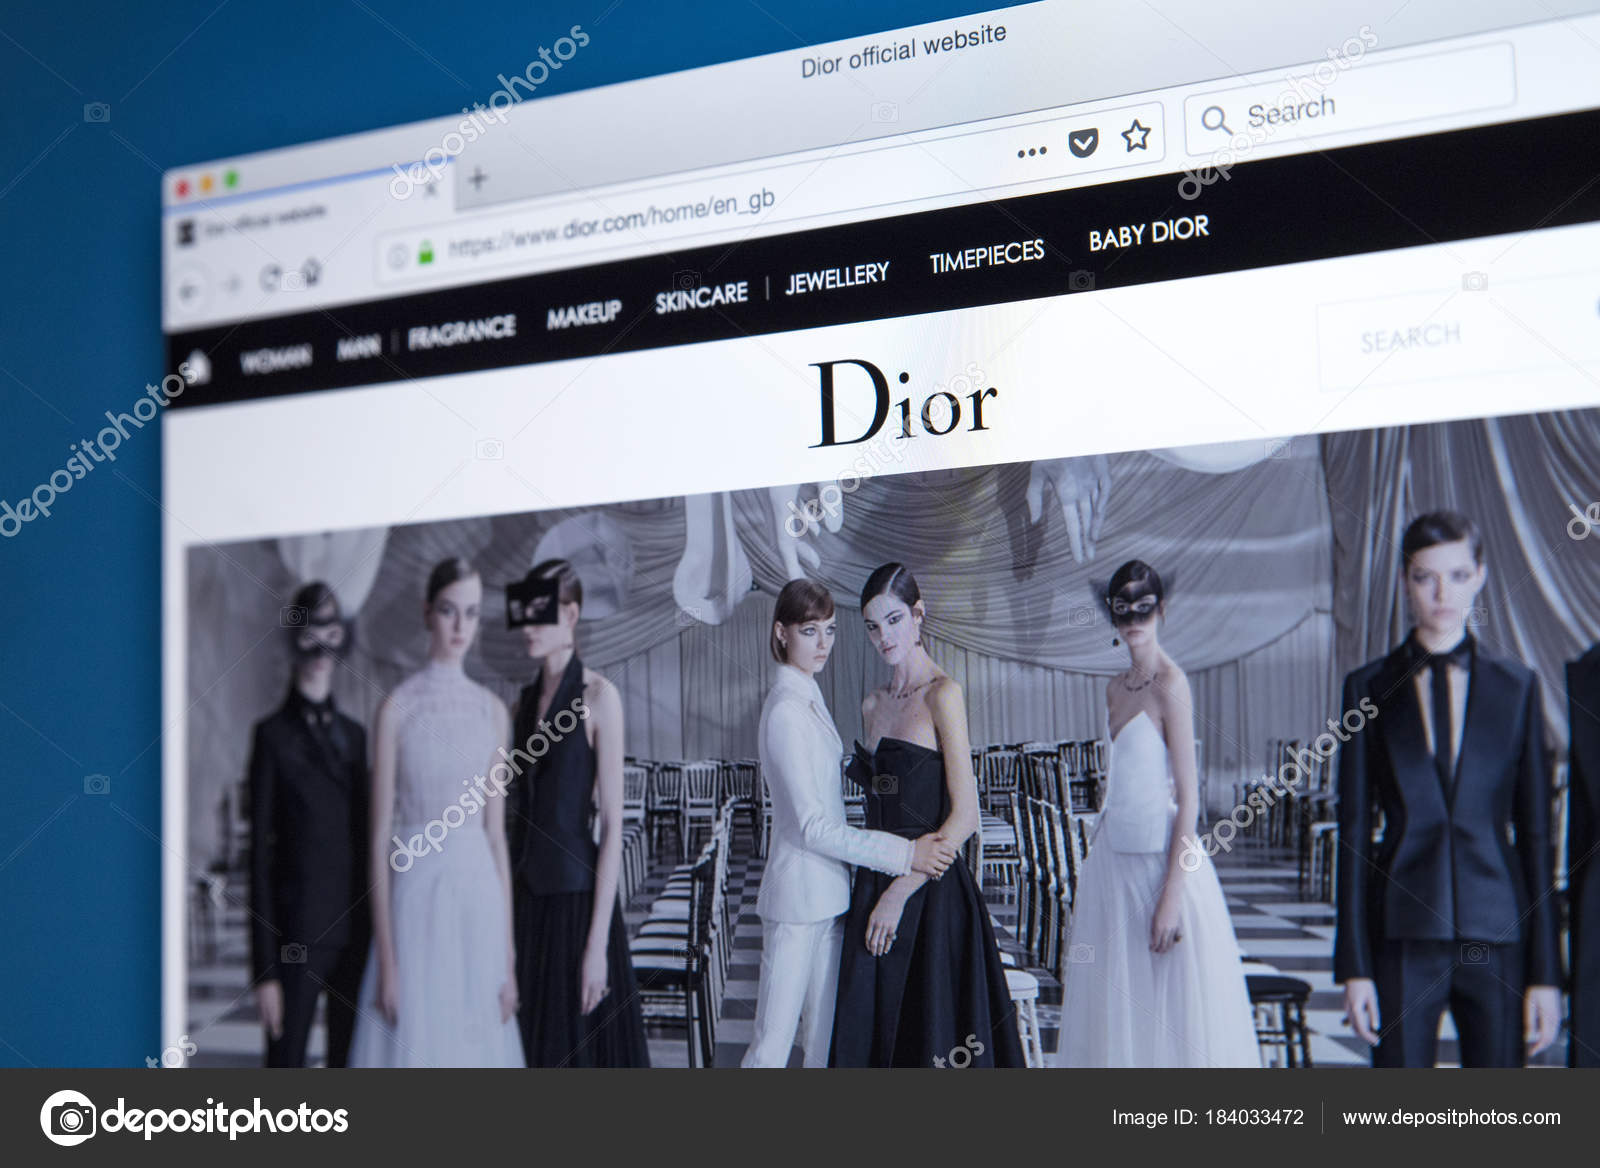 dior website